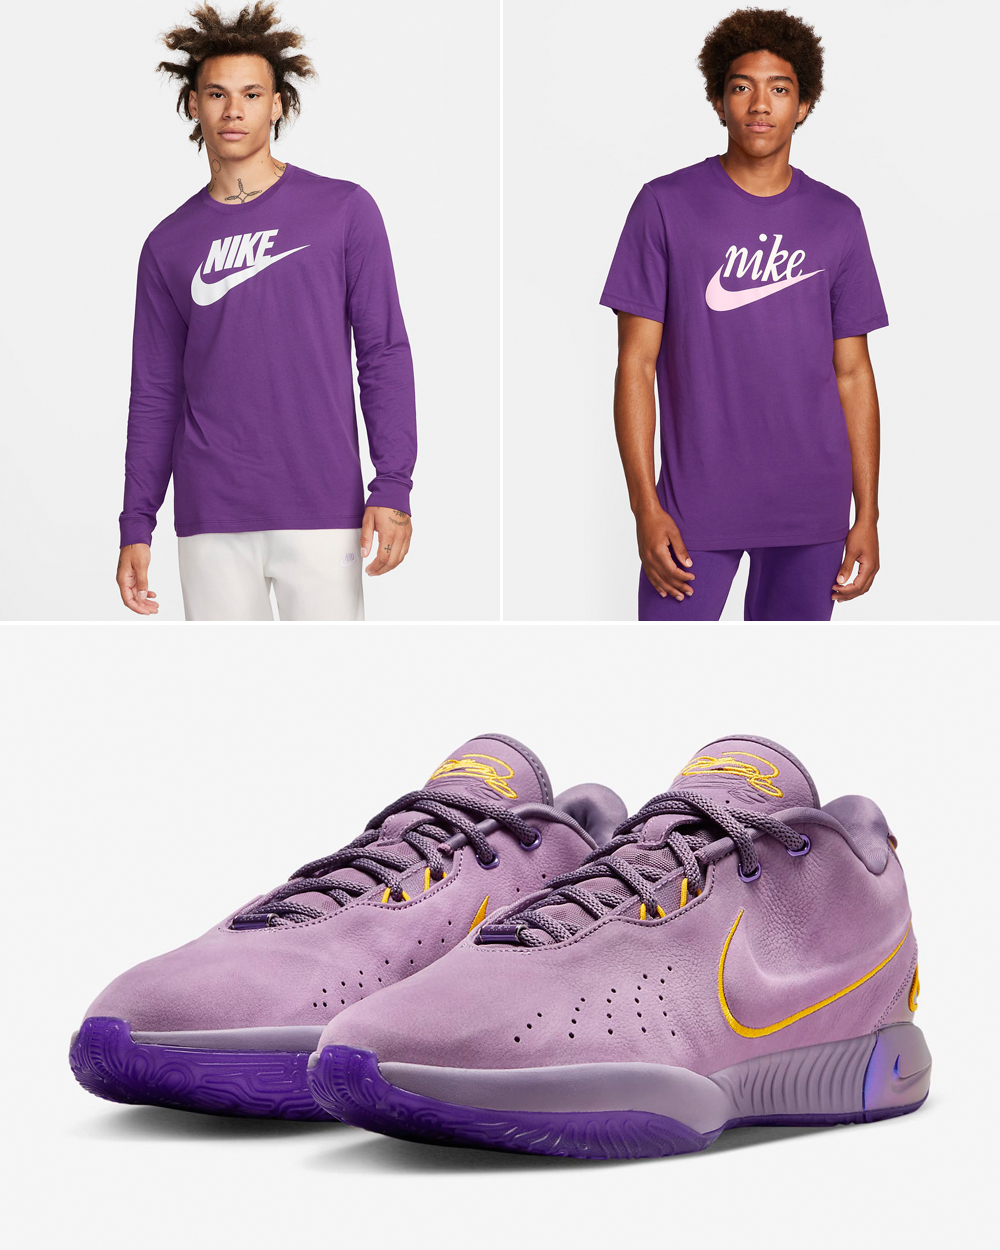 Nike-LeBron-21-Purple-Rain-Outfits